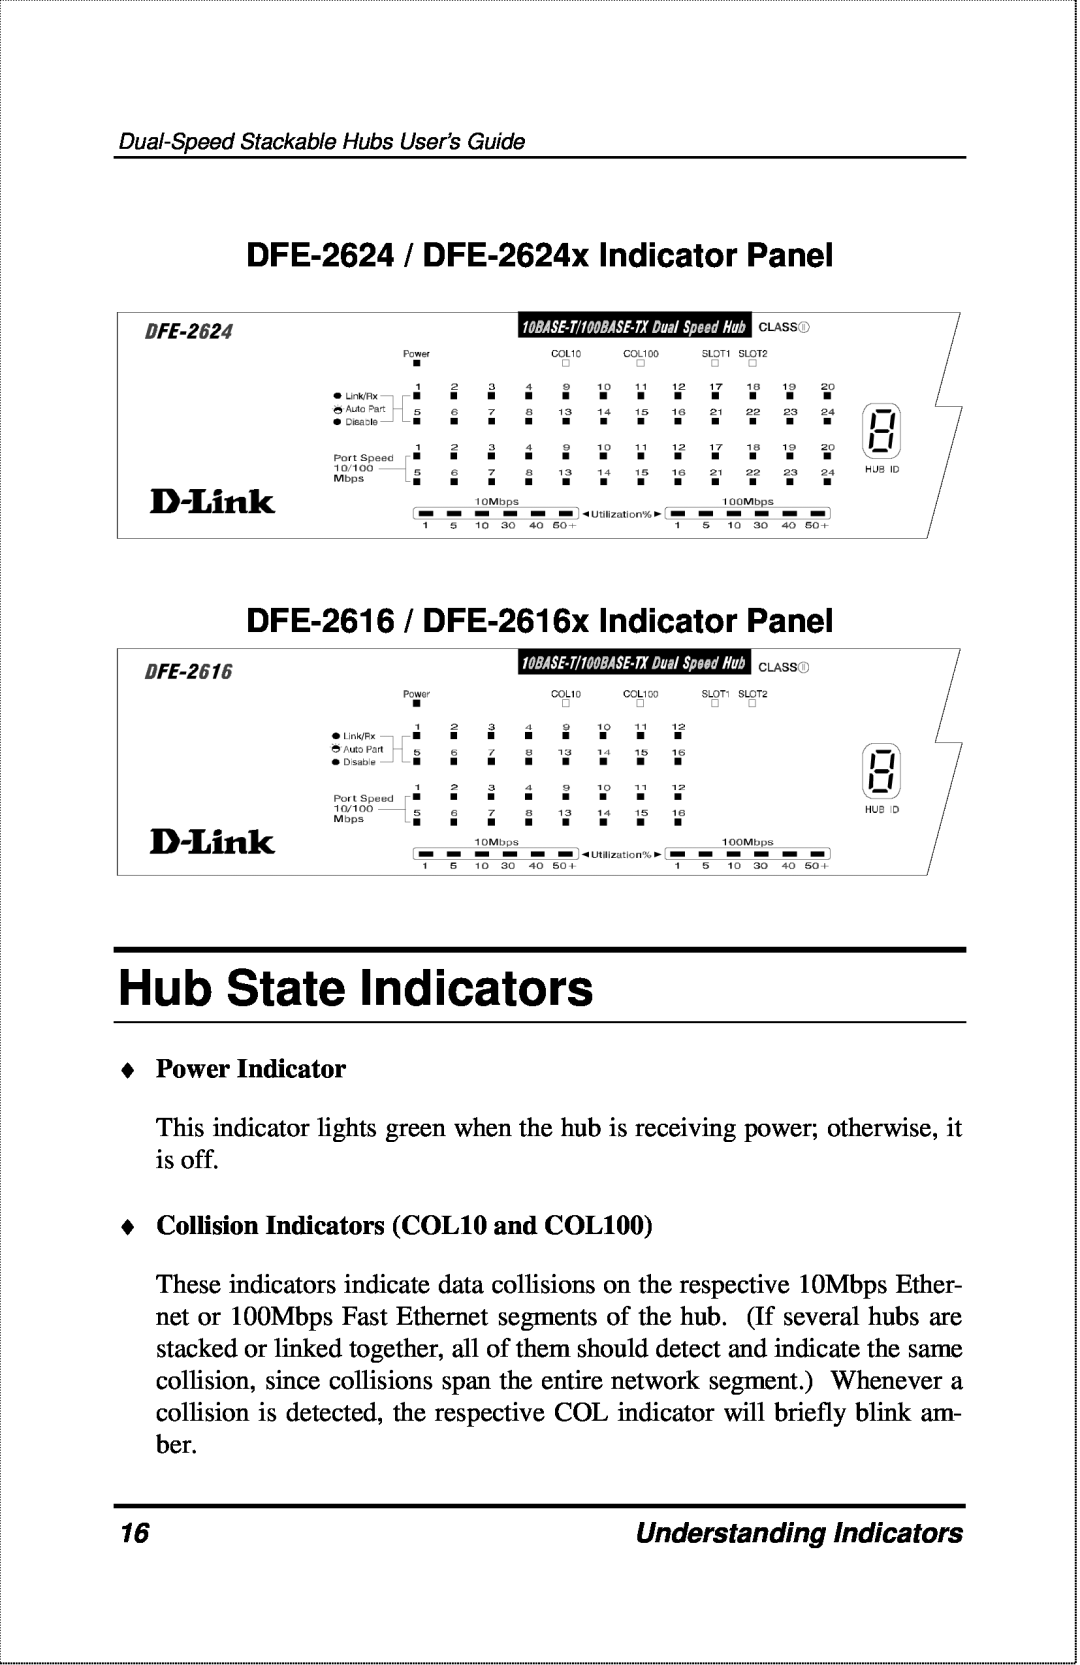 D-Link DFE-2600 manual Hub State Indicators, DFE-2624 / DFE-2624x Indicator Panel, DFE-2616 / DFE-2616x Indicator Panel 